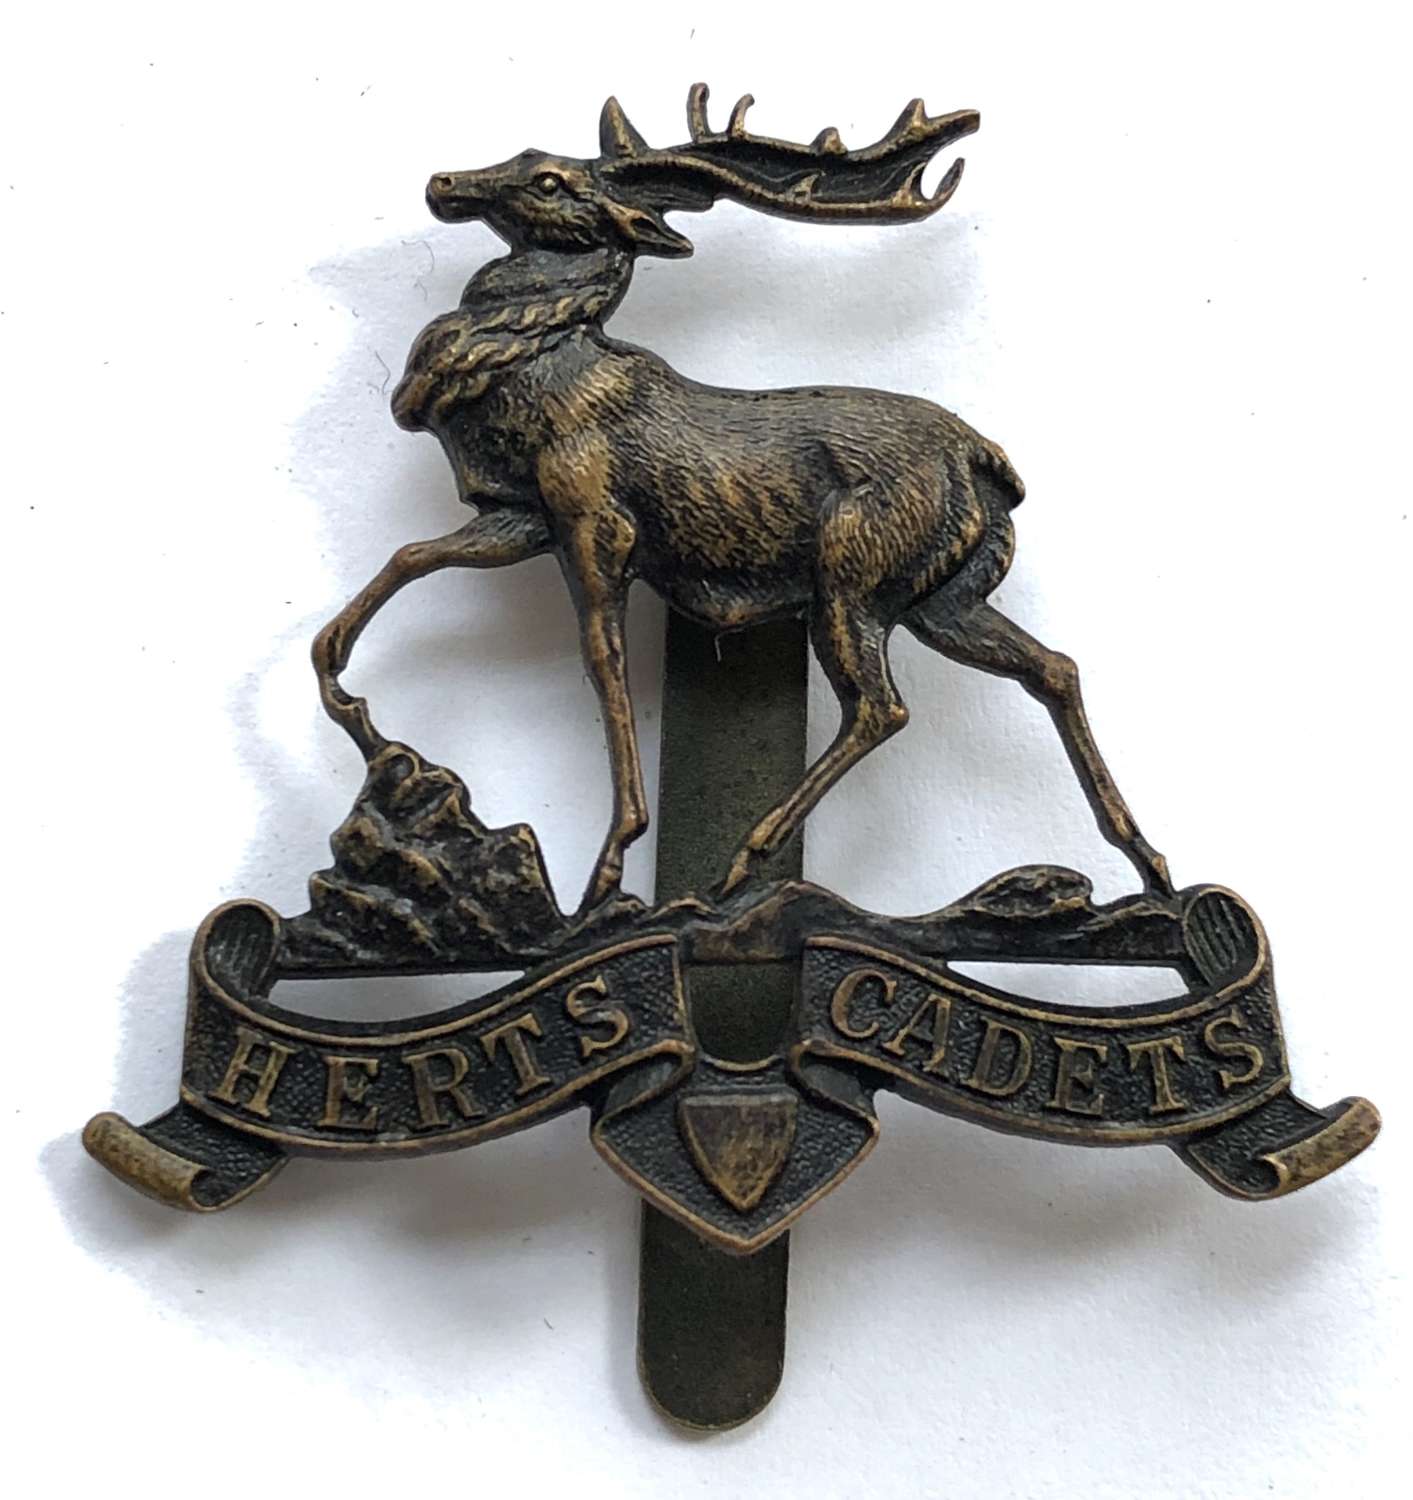 Hertfordshire Cadets cap badge